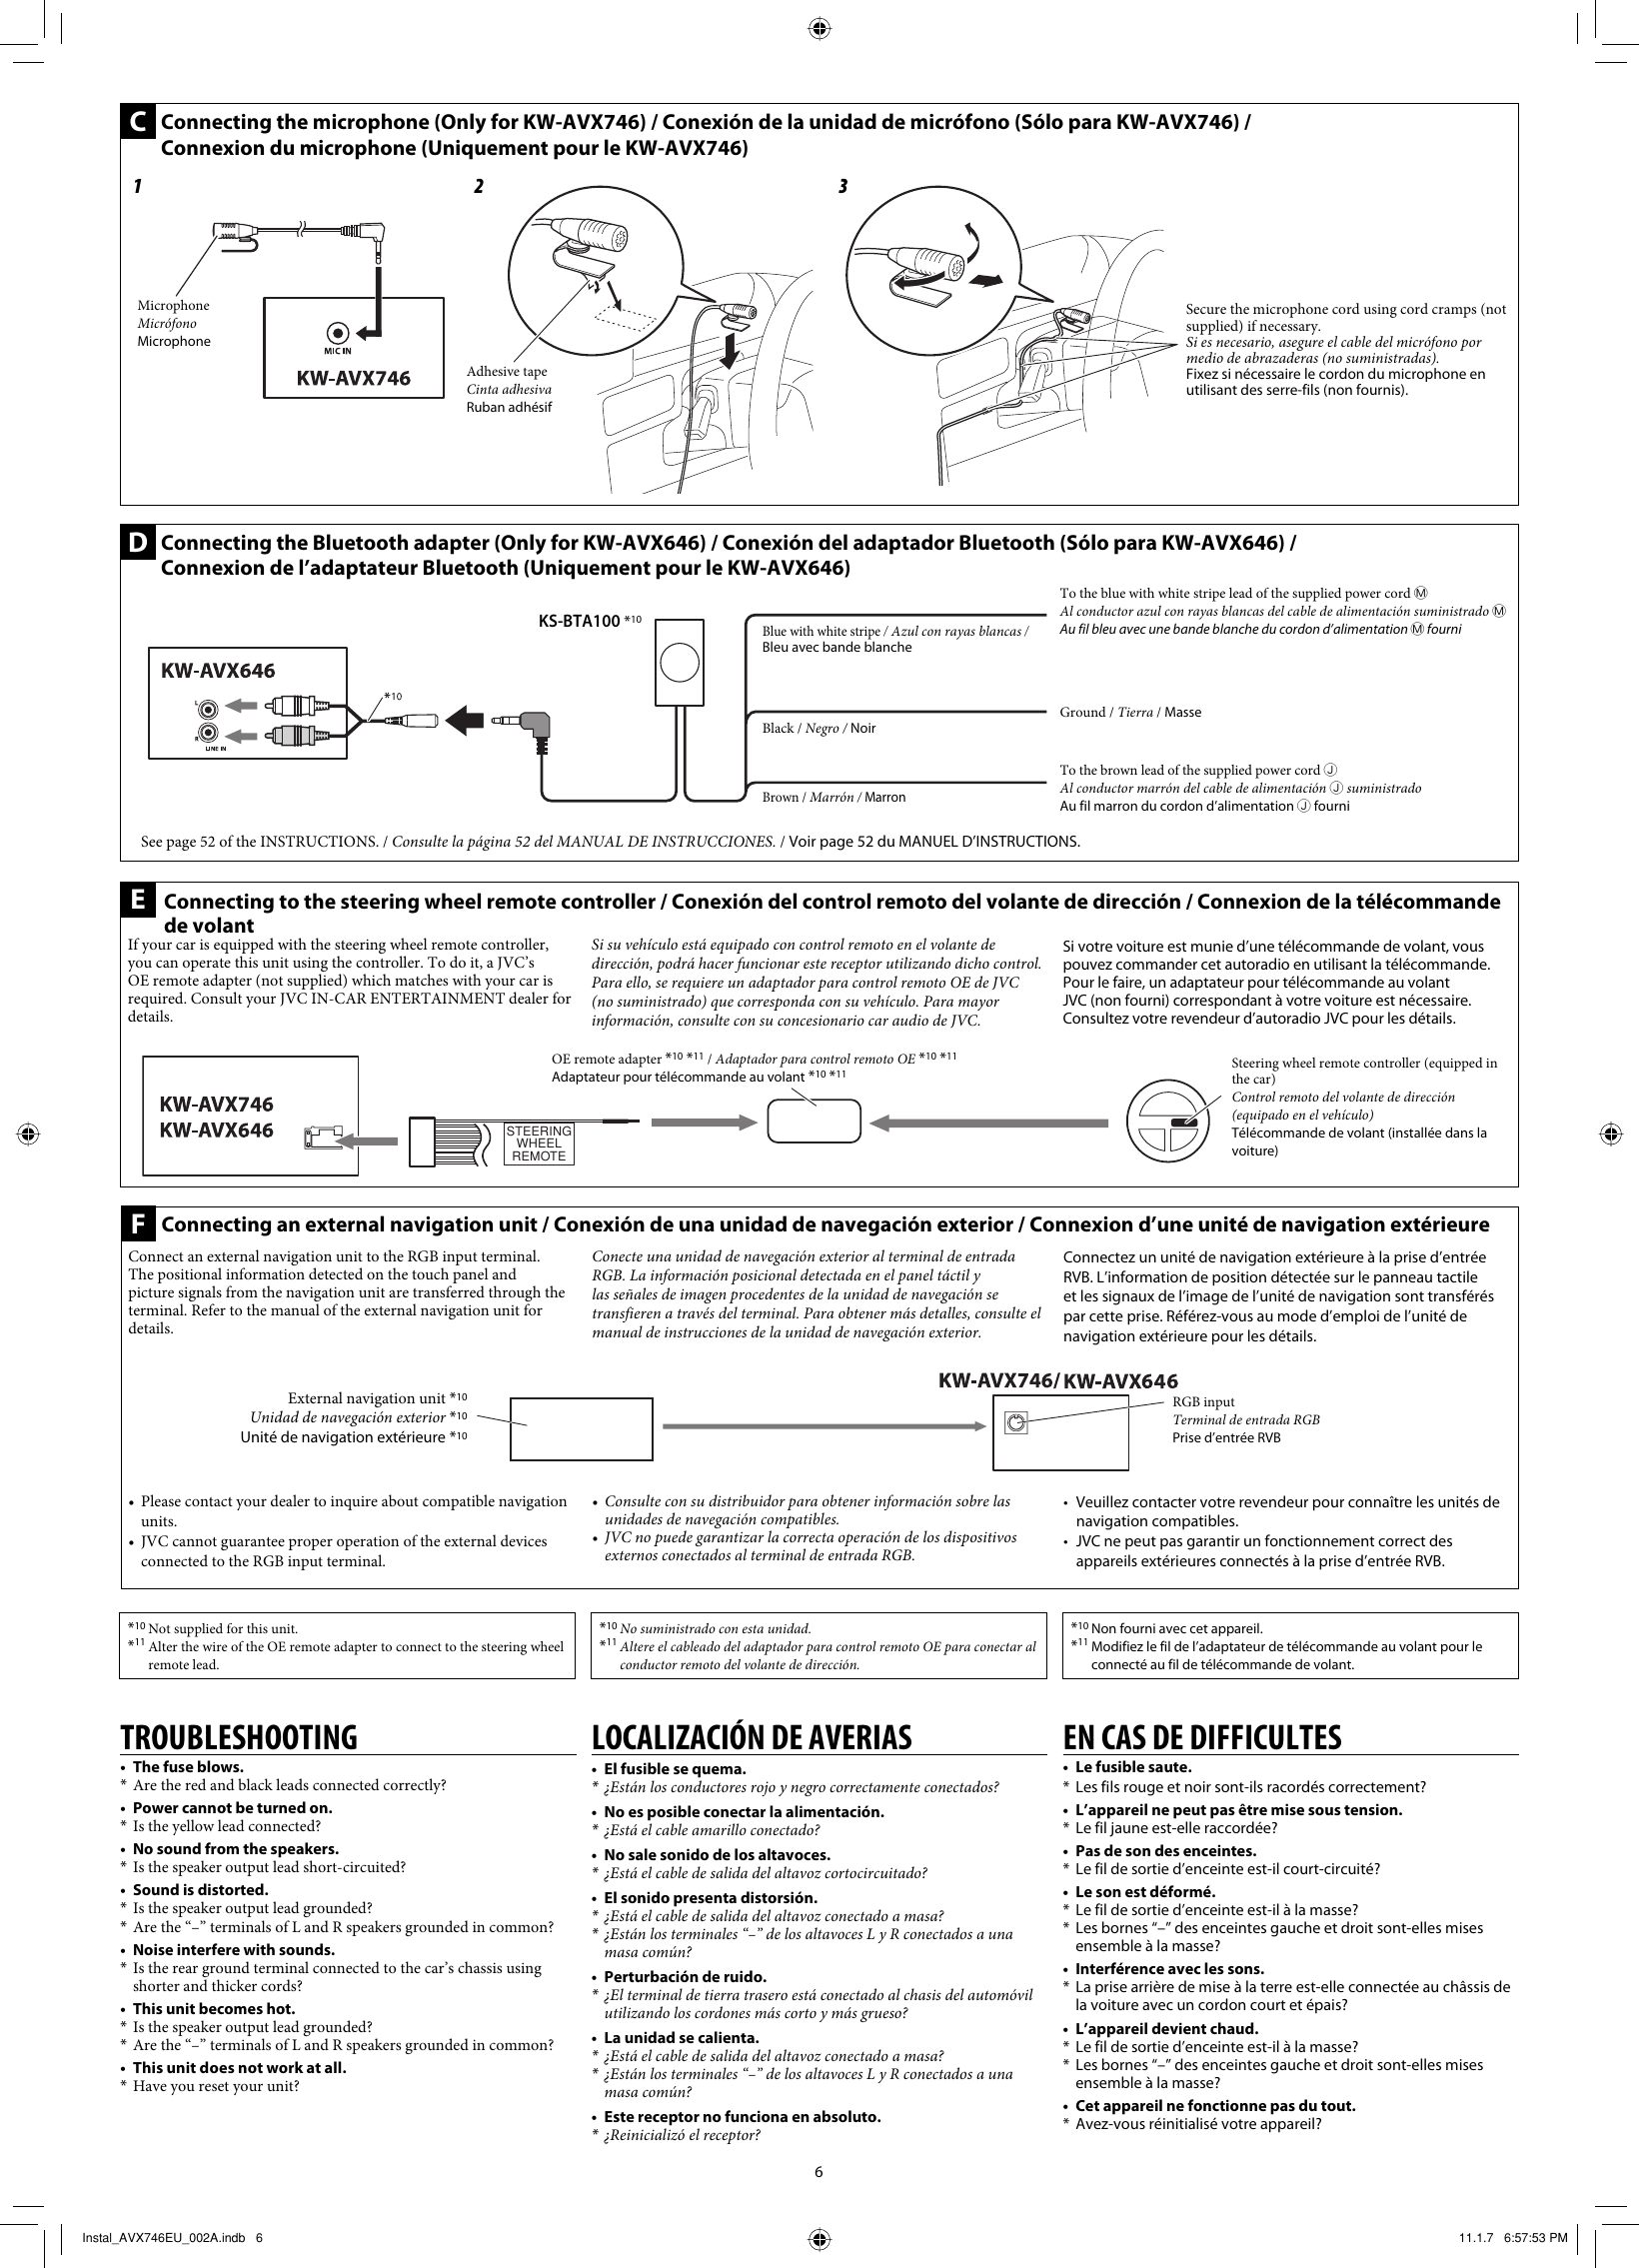 Page 6 of 6 - JVC KW-AVX646EU KW-AVX746/KW-AVX646[EU] User Manual KW-AVX646EU, KW-AVX746EU LVT2176-002A